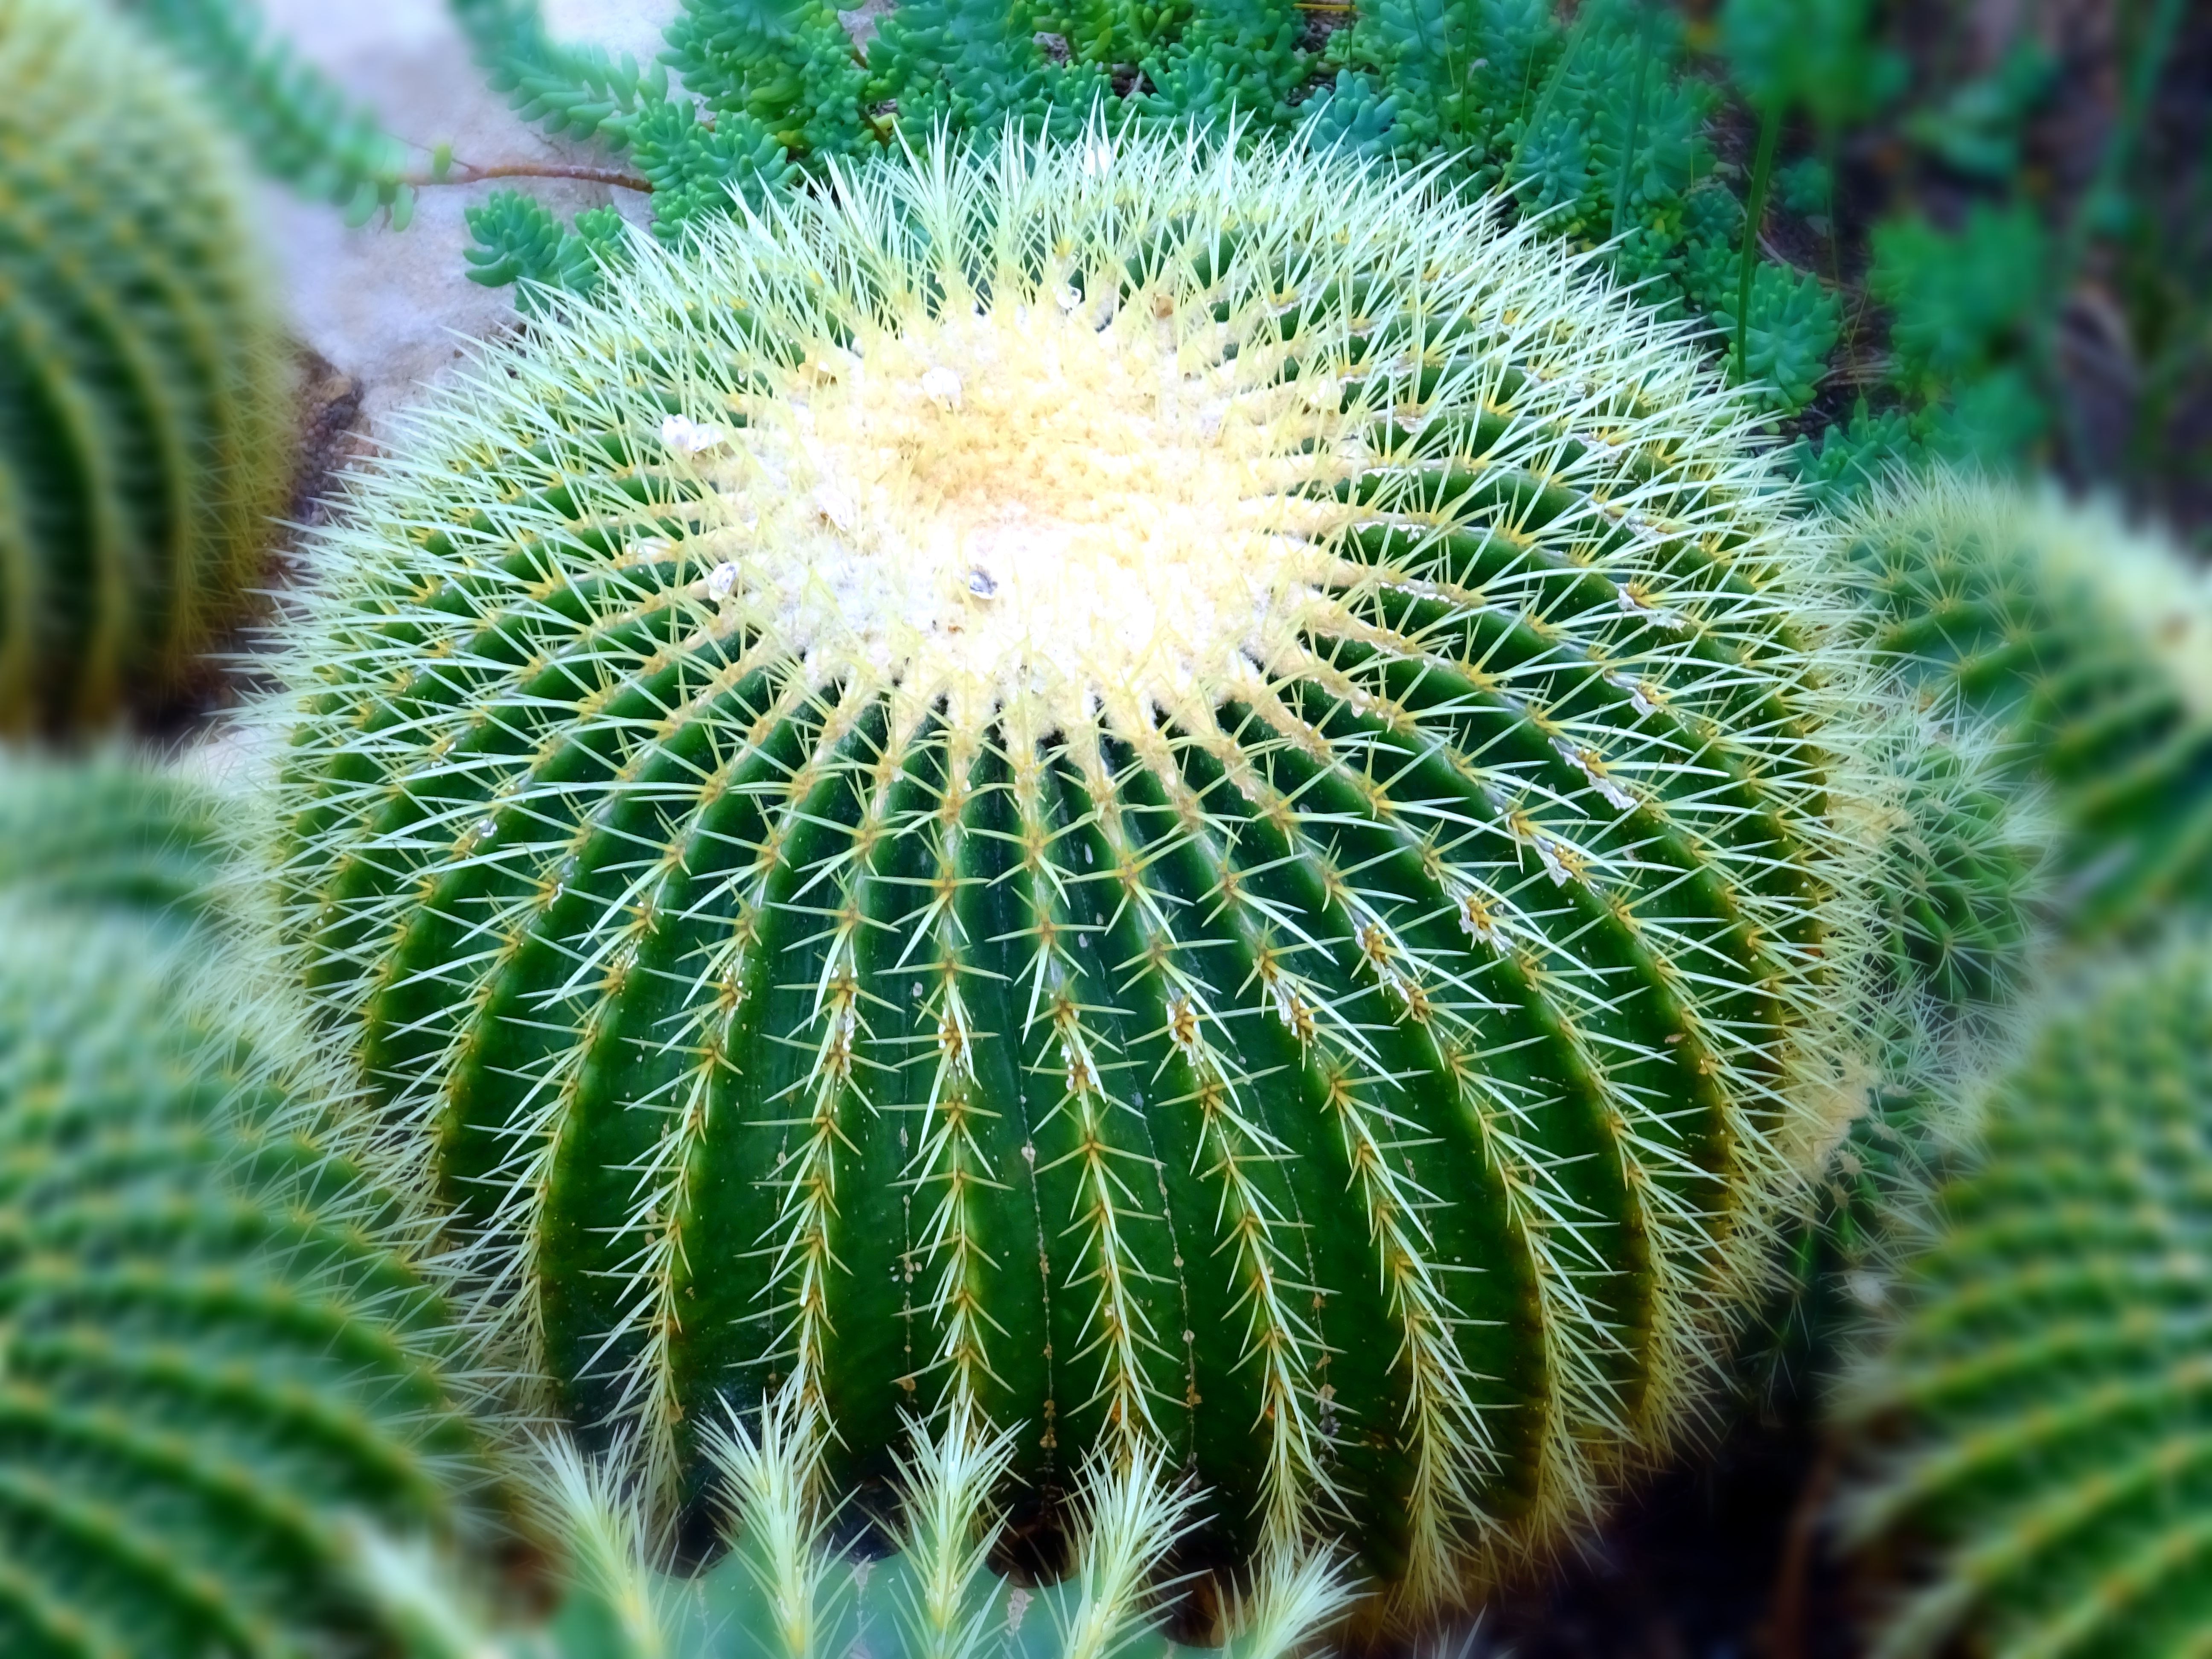 200+ Interesting Cactus Thorn Photos · Pexels · Free Stock Photos